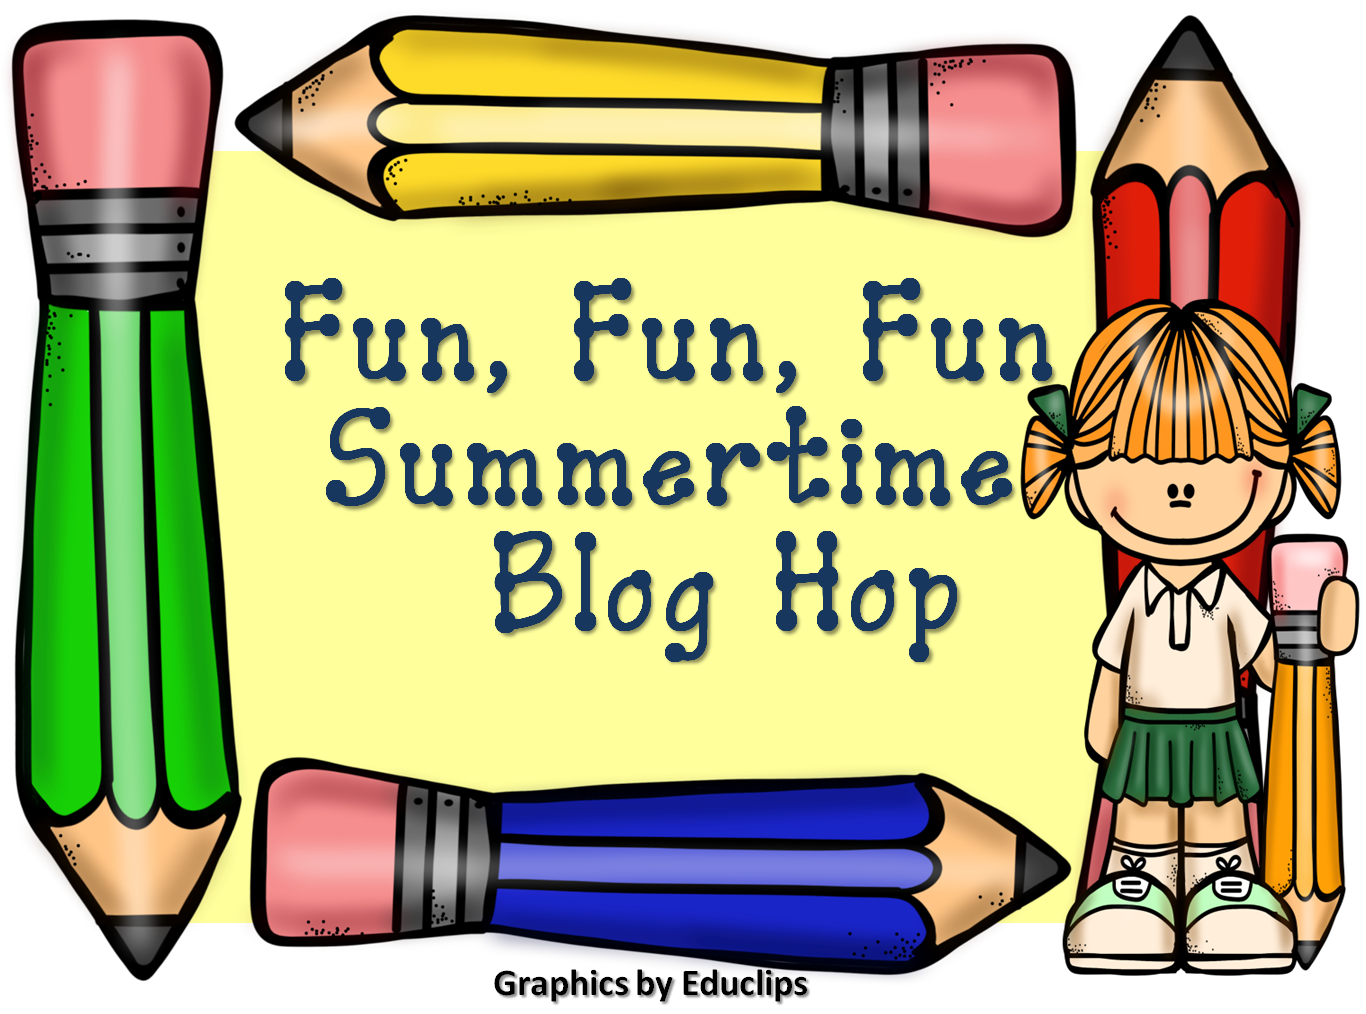 Fun, Fun, Fun Summertime Blog Hop